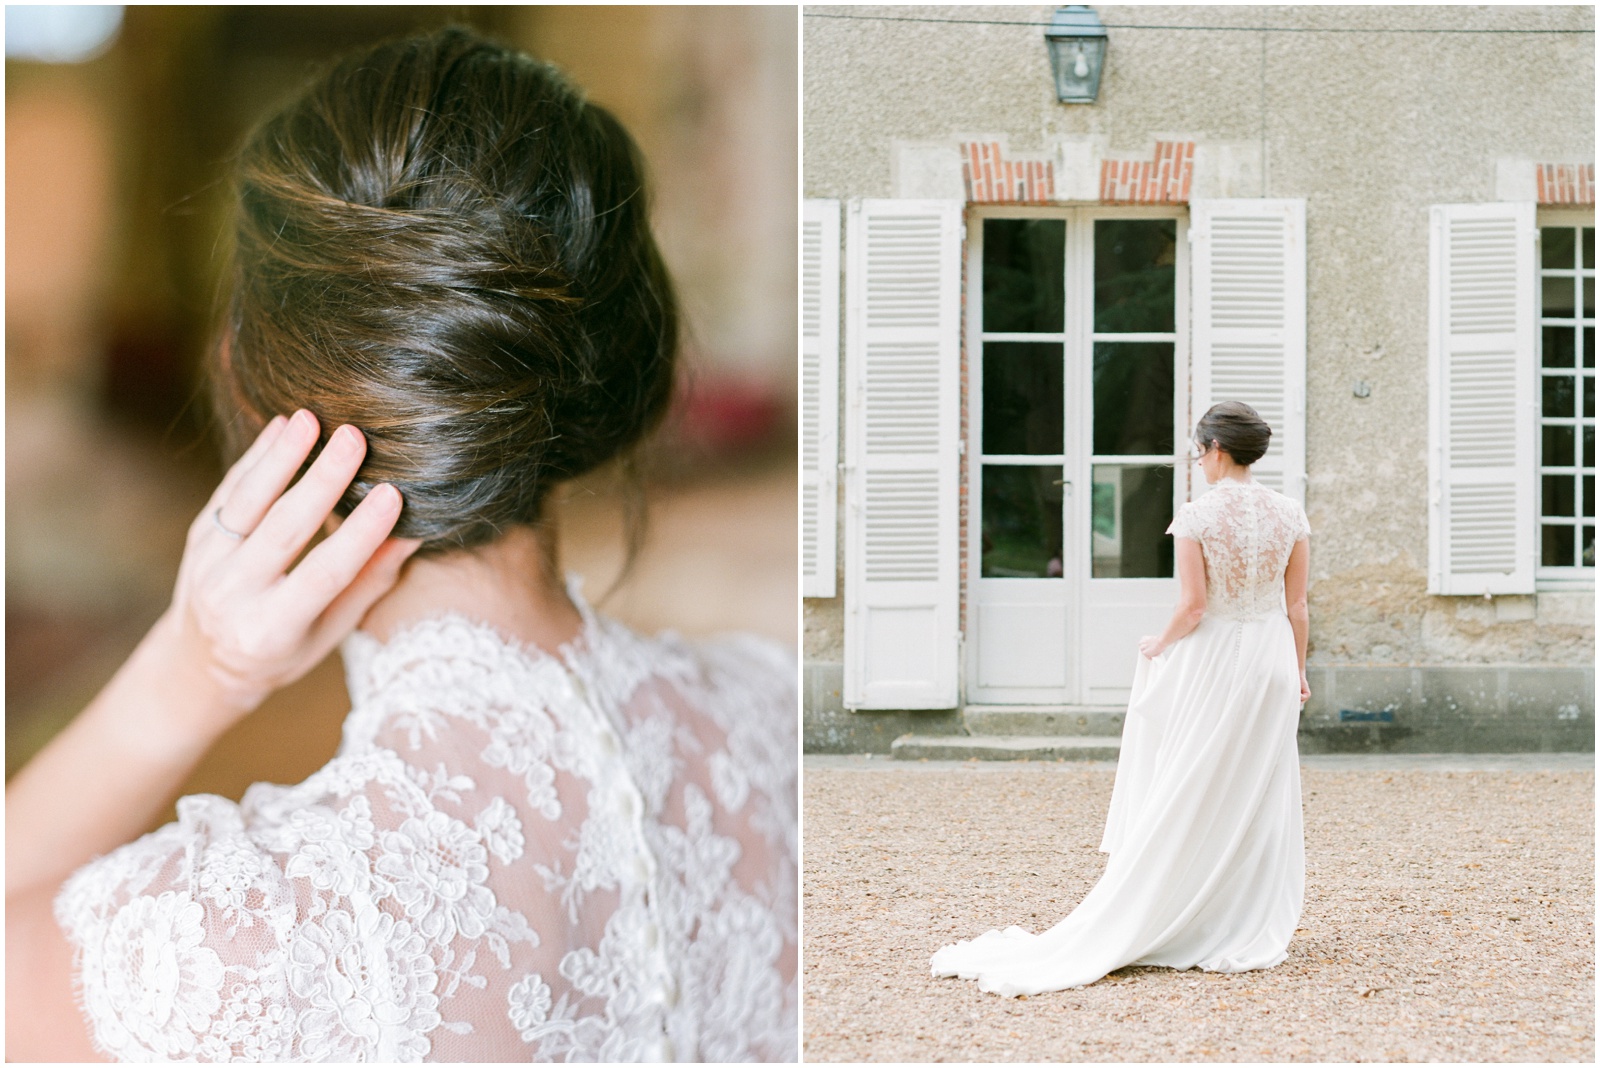 French twist updo with lace wedding dress